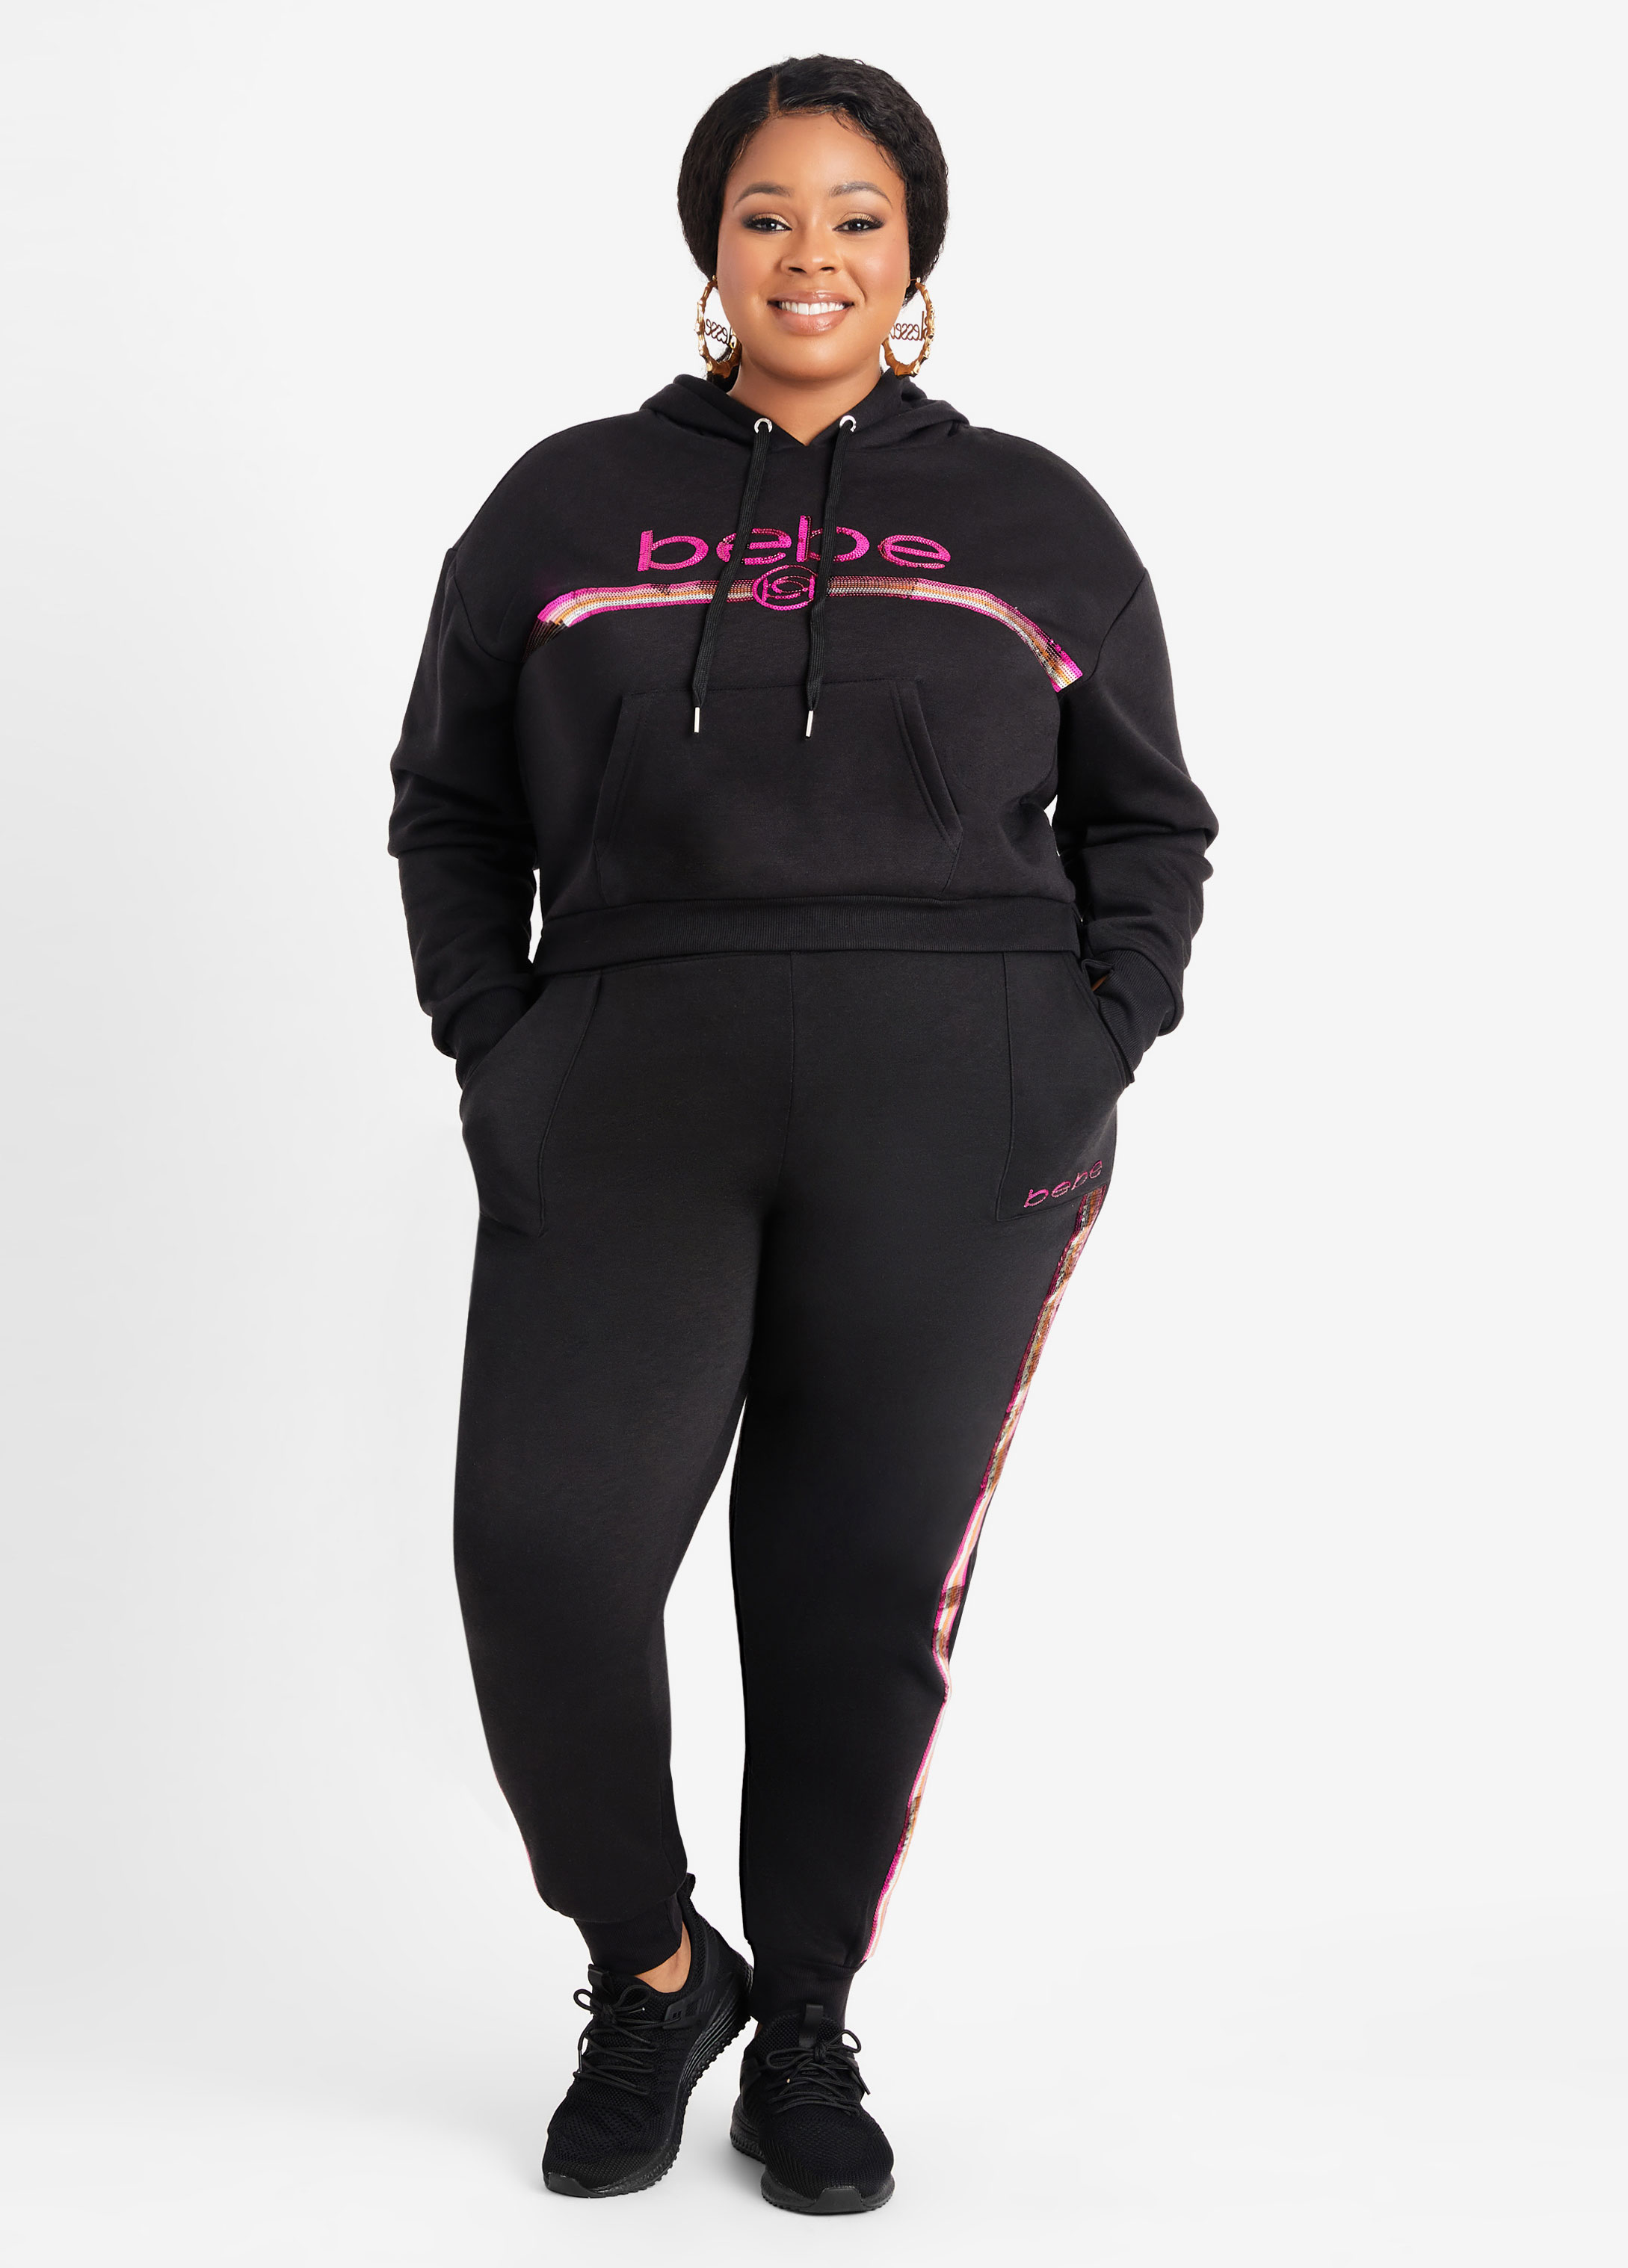 Bebe Sport Shirt Women Large Black Activewear Hoodie Long Sleeve Logo  Pullover - $22 - From Dawn